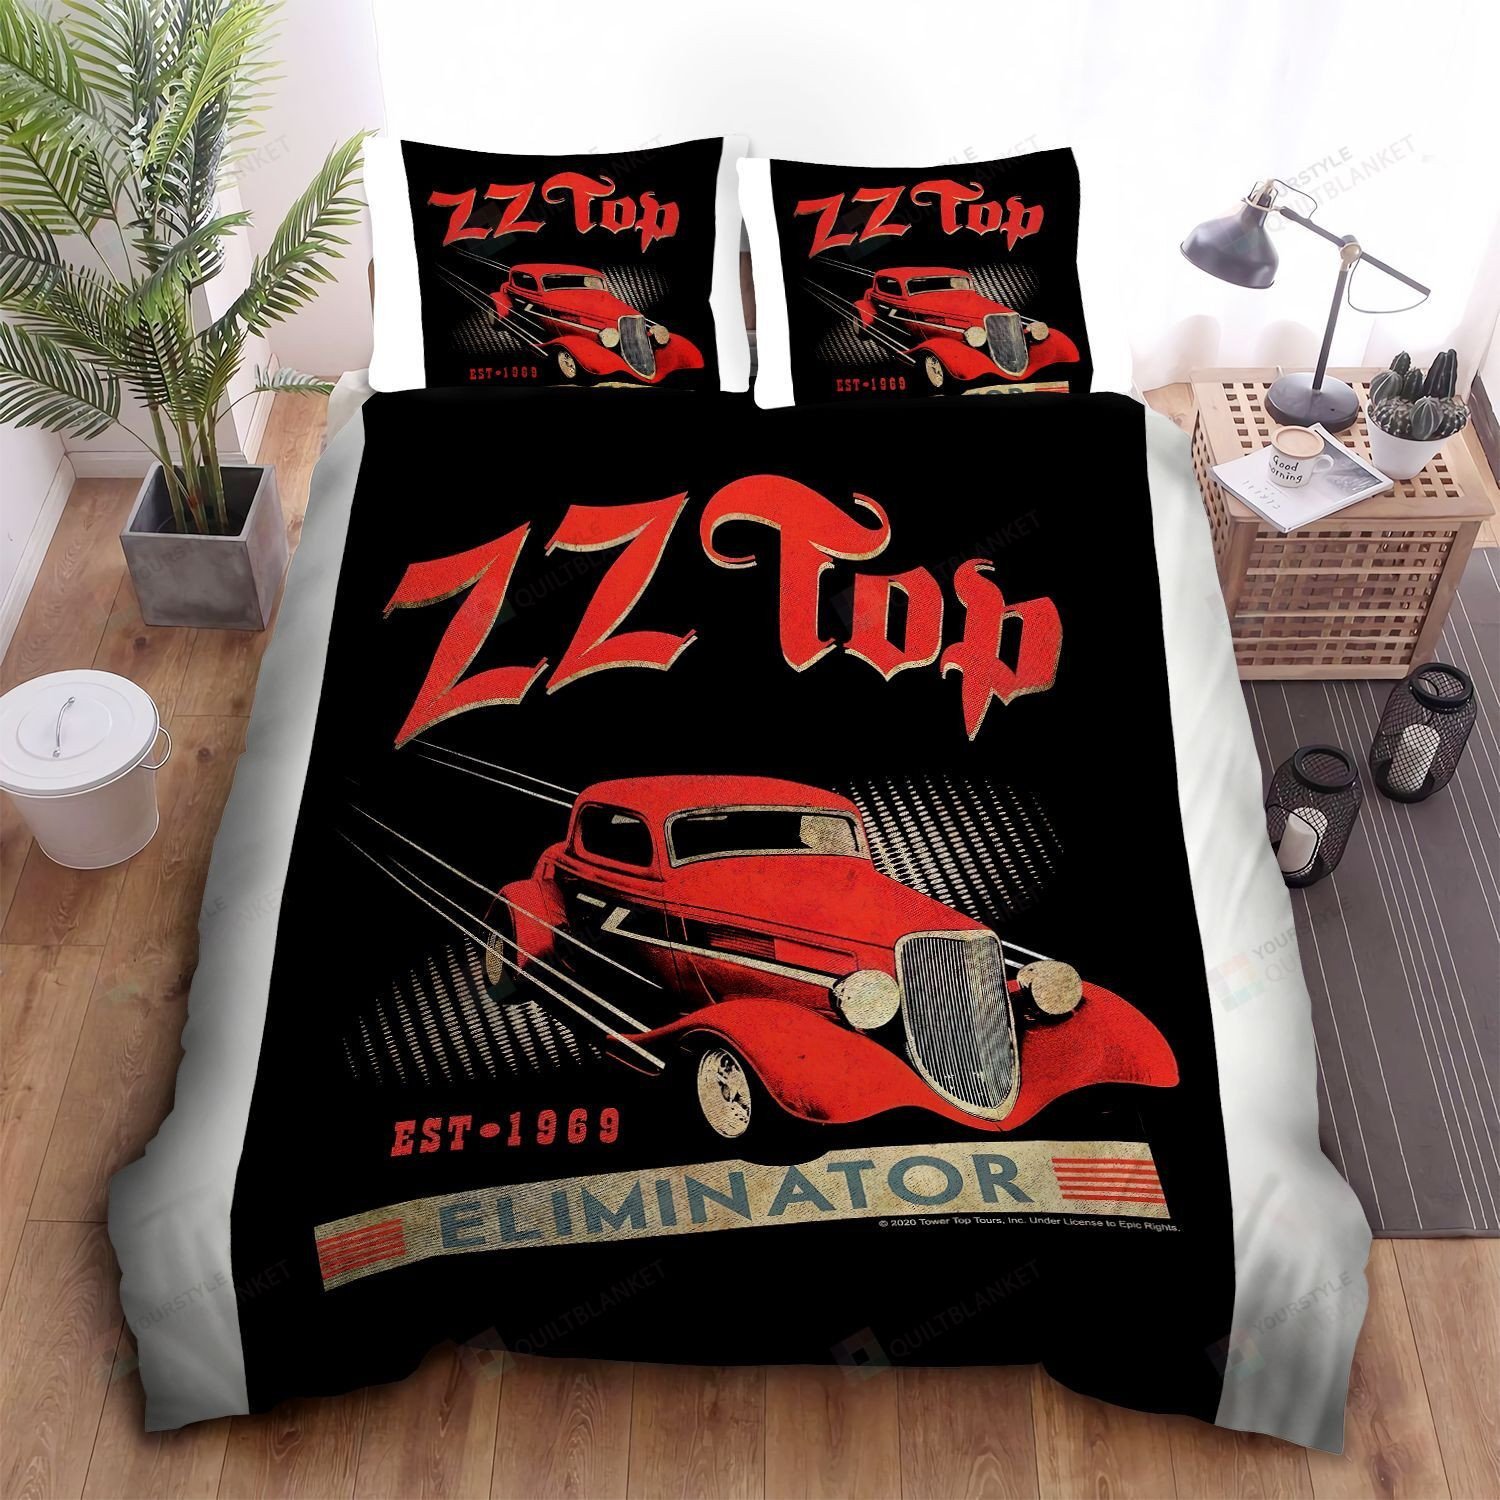 Zz Top, Eliminator Car Poster Spread Duvet Cover Bedding Sets